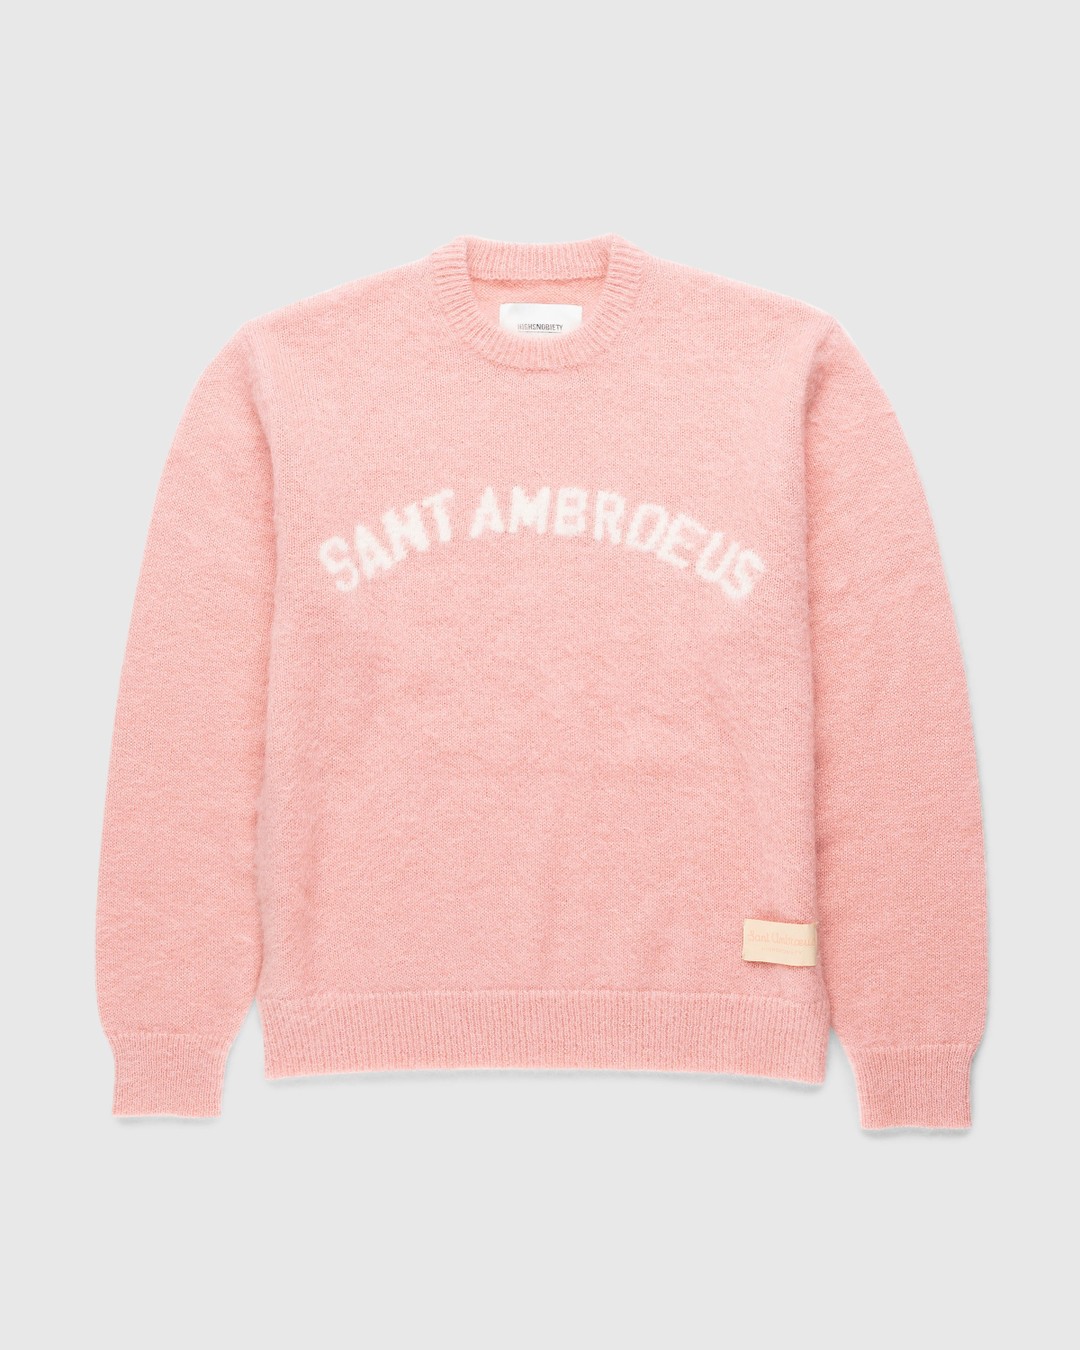 Highsnobiety x Sant Ambroeus – Knit Crewneck Pink  - Knitwear - Pink - Image 1